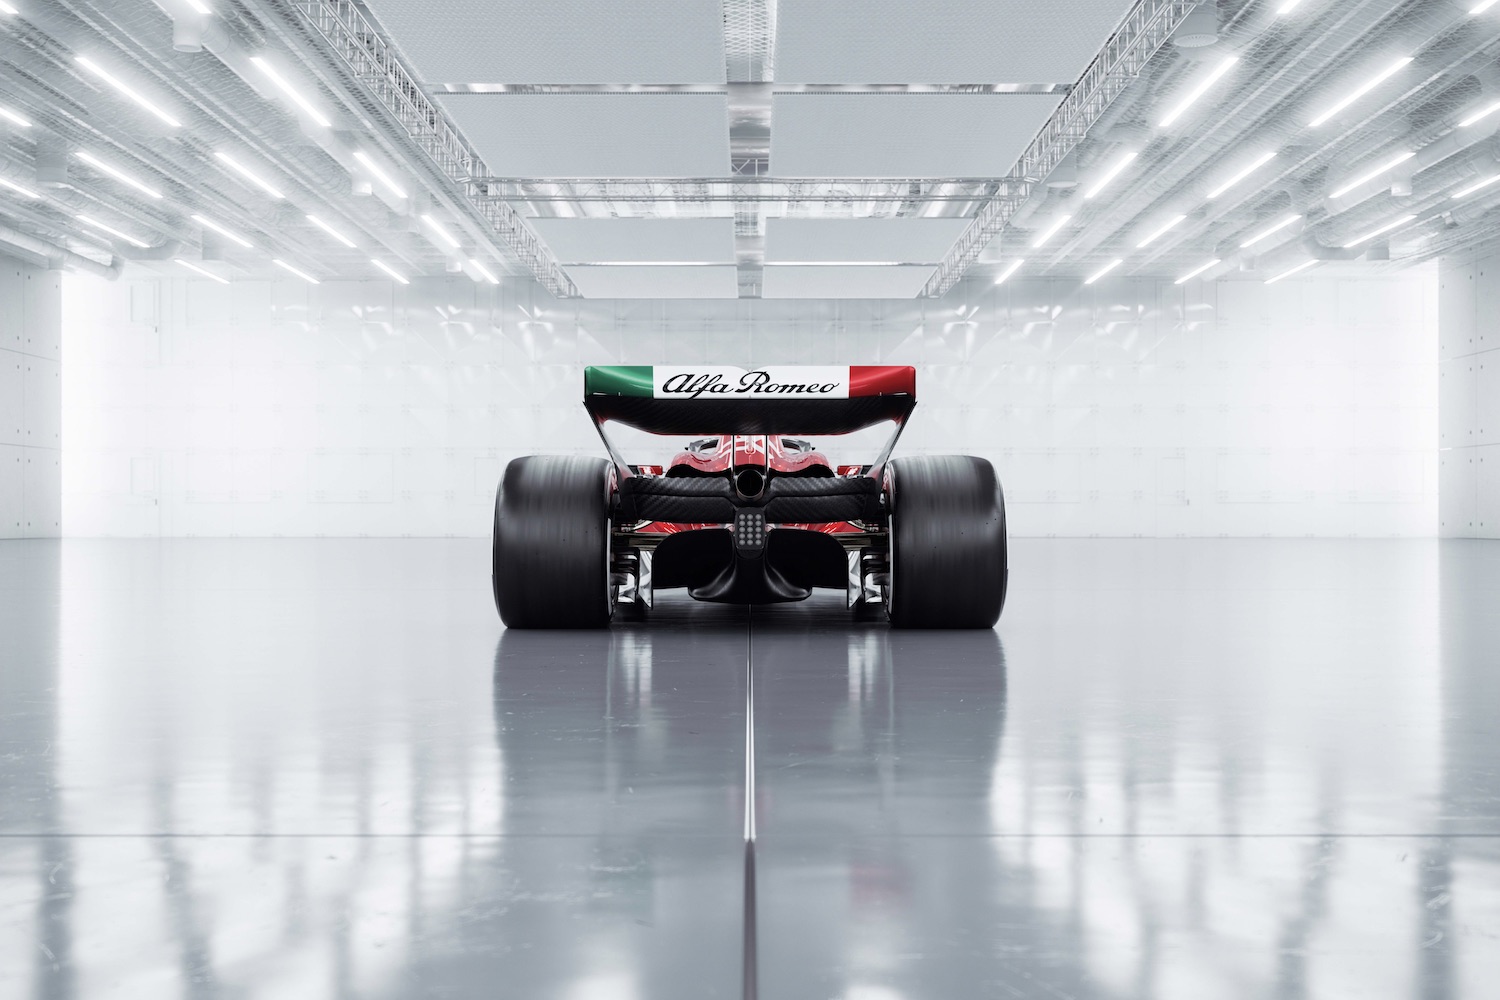 2023 Alfa Romeo F1 C43 rear end close up in a studio with bright studio lighting.